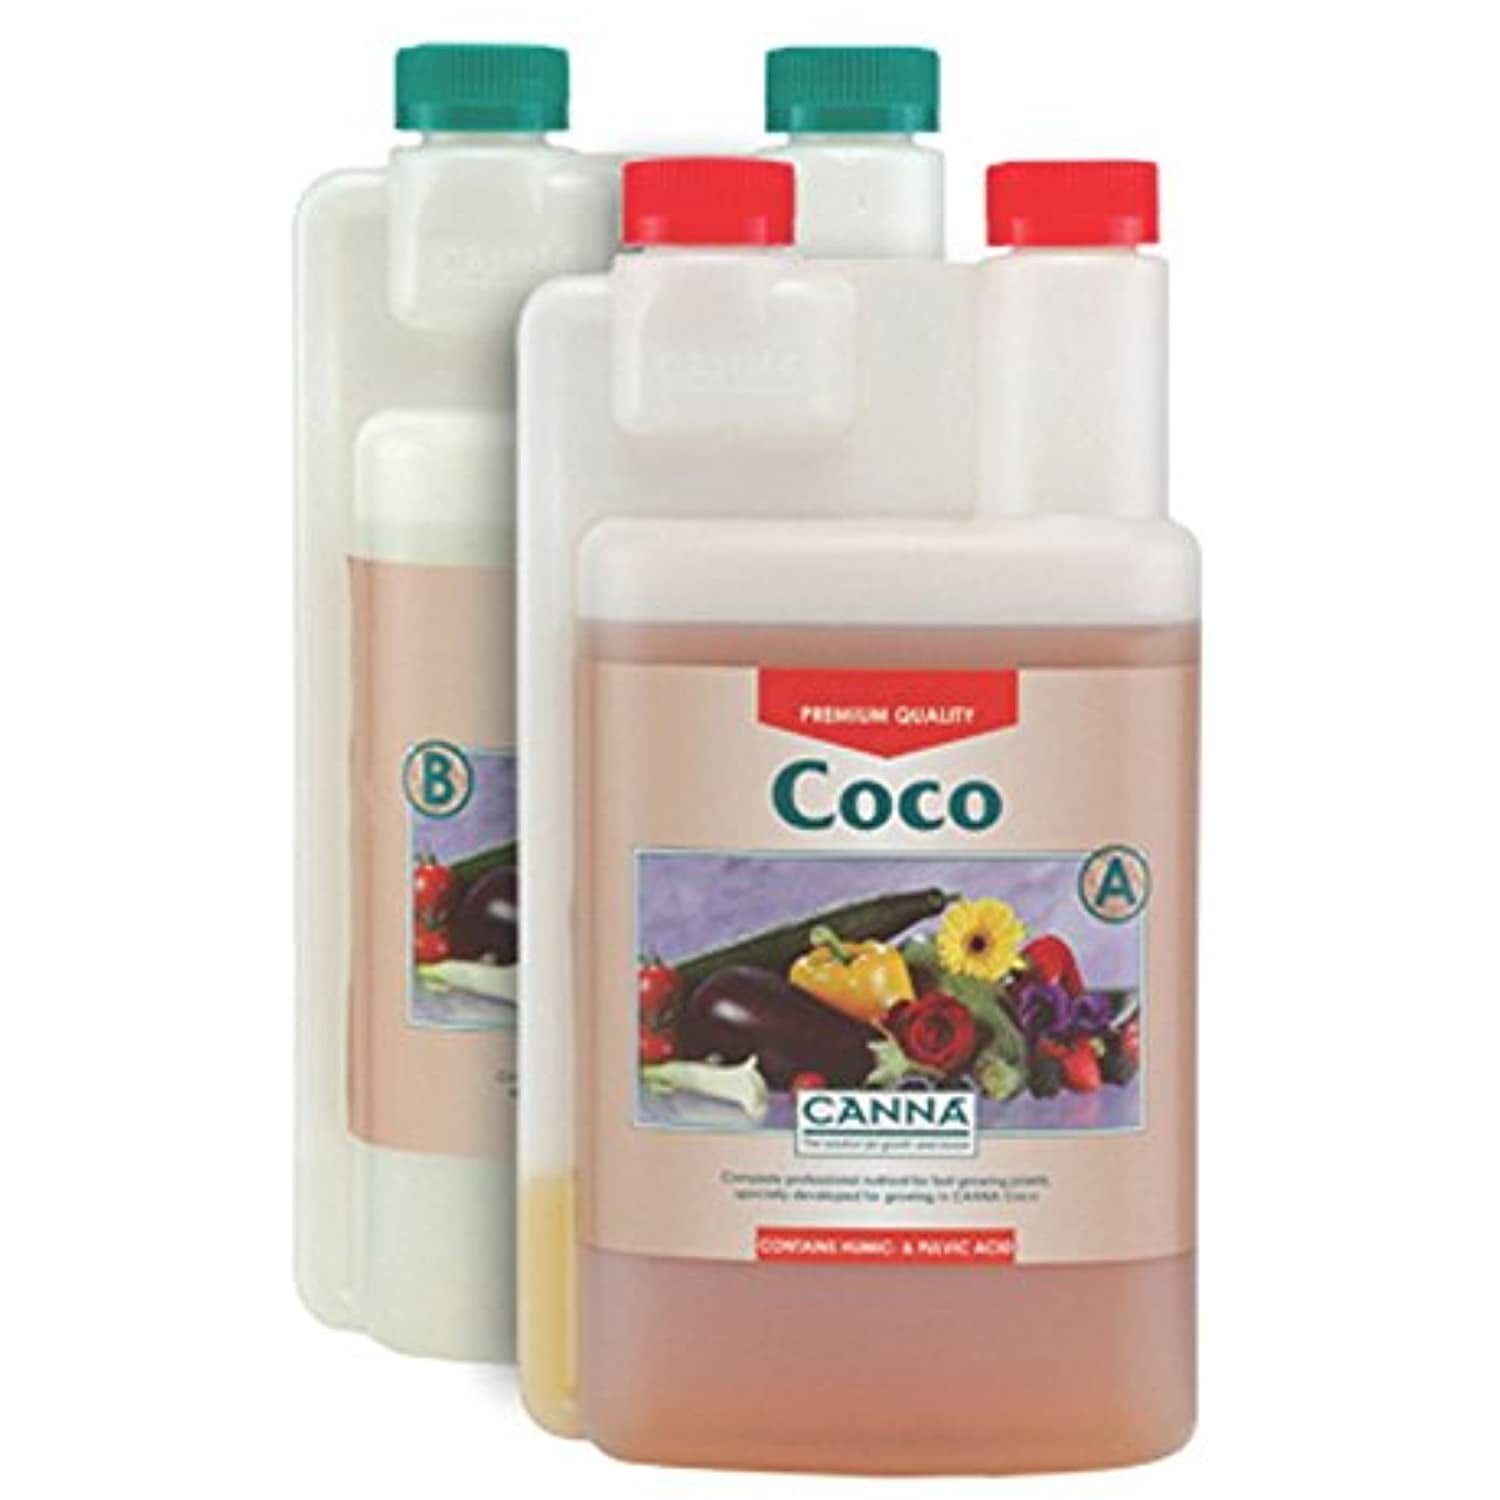 CANNA Coco Coir A+B 1, 5, 10L Veg & Flower Plant Food Base Nutrients Hydroponics (1 Litre)